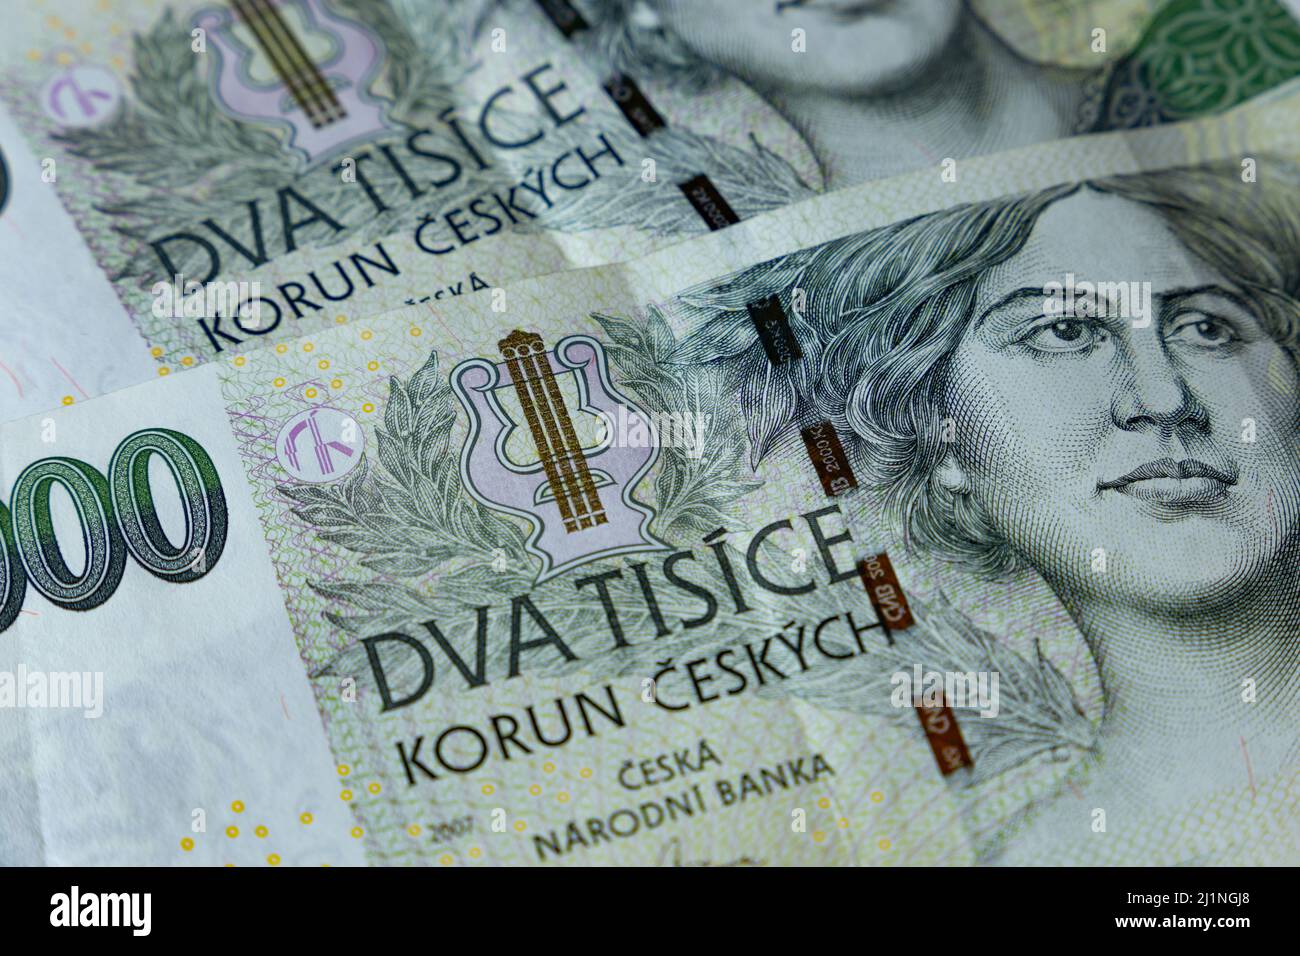 2000 Czech Koruna - CZK - the Czech banknotes. Stock Photo